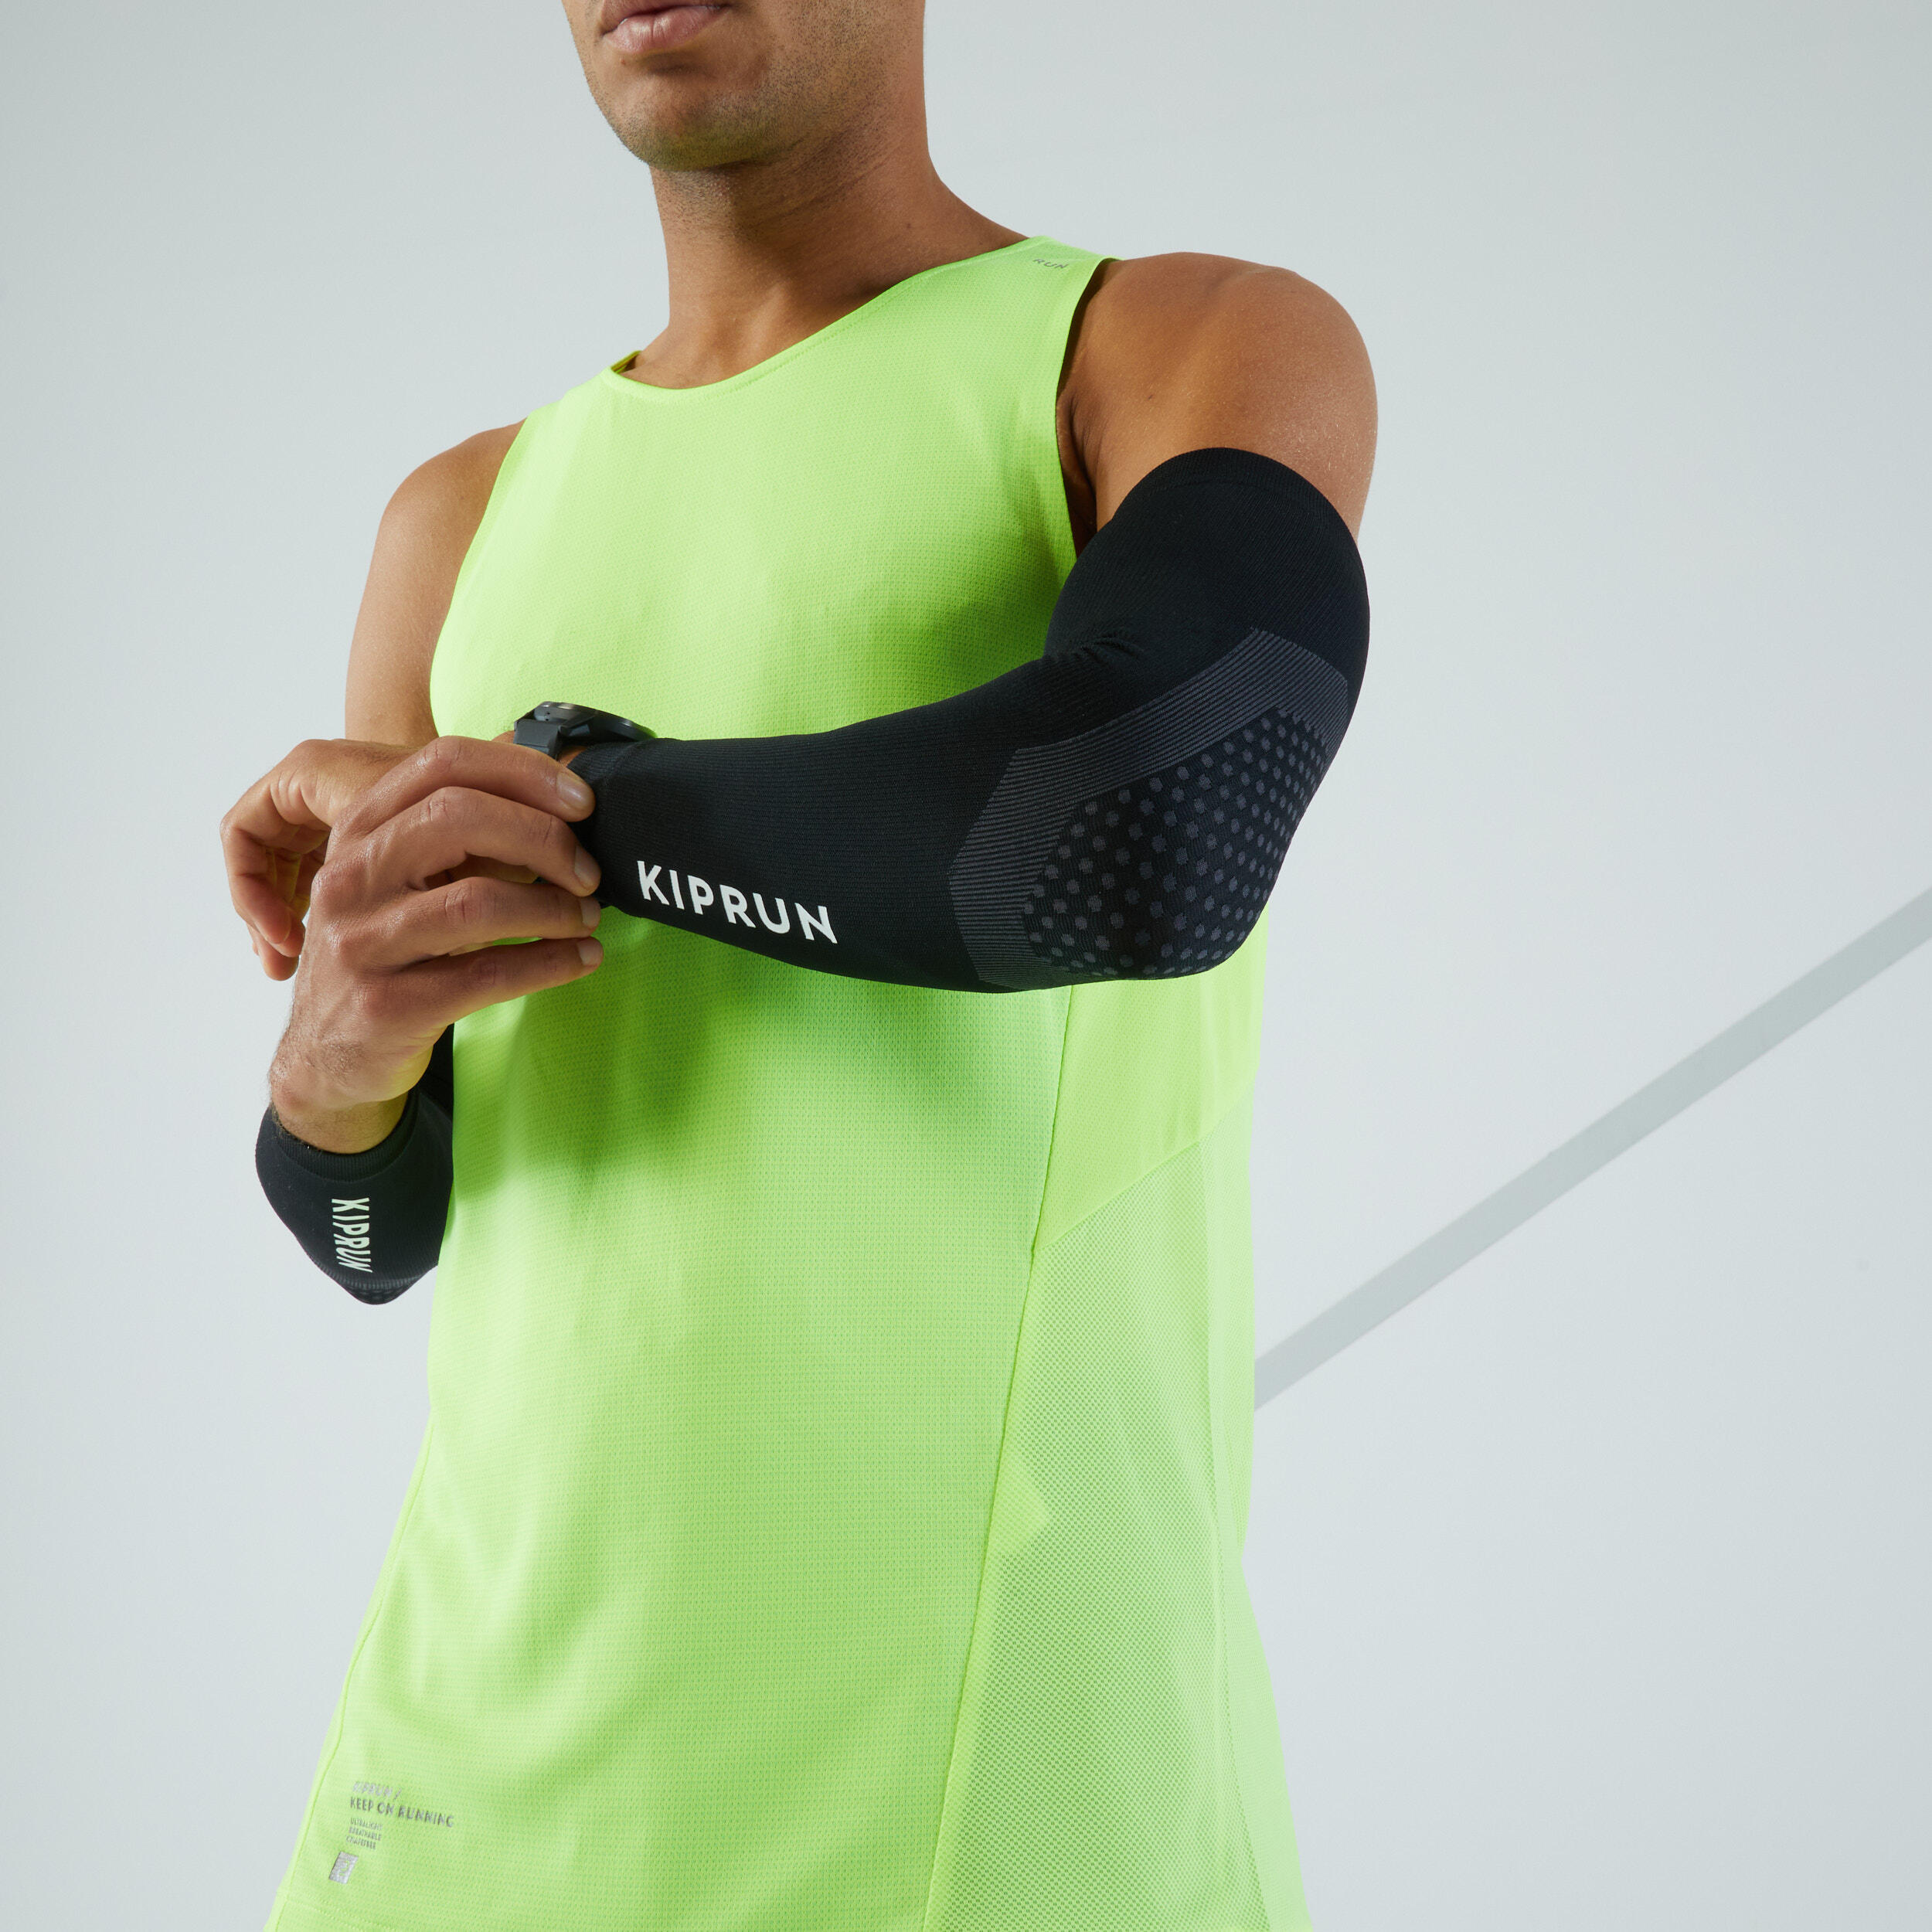 Kalenji Unisex Anti-UV Arm Sleeve Pair, Sports Equipment, Hiking